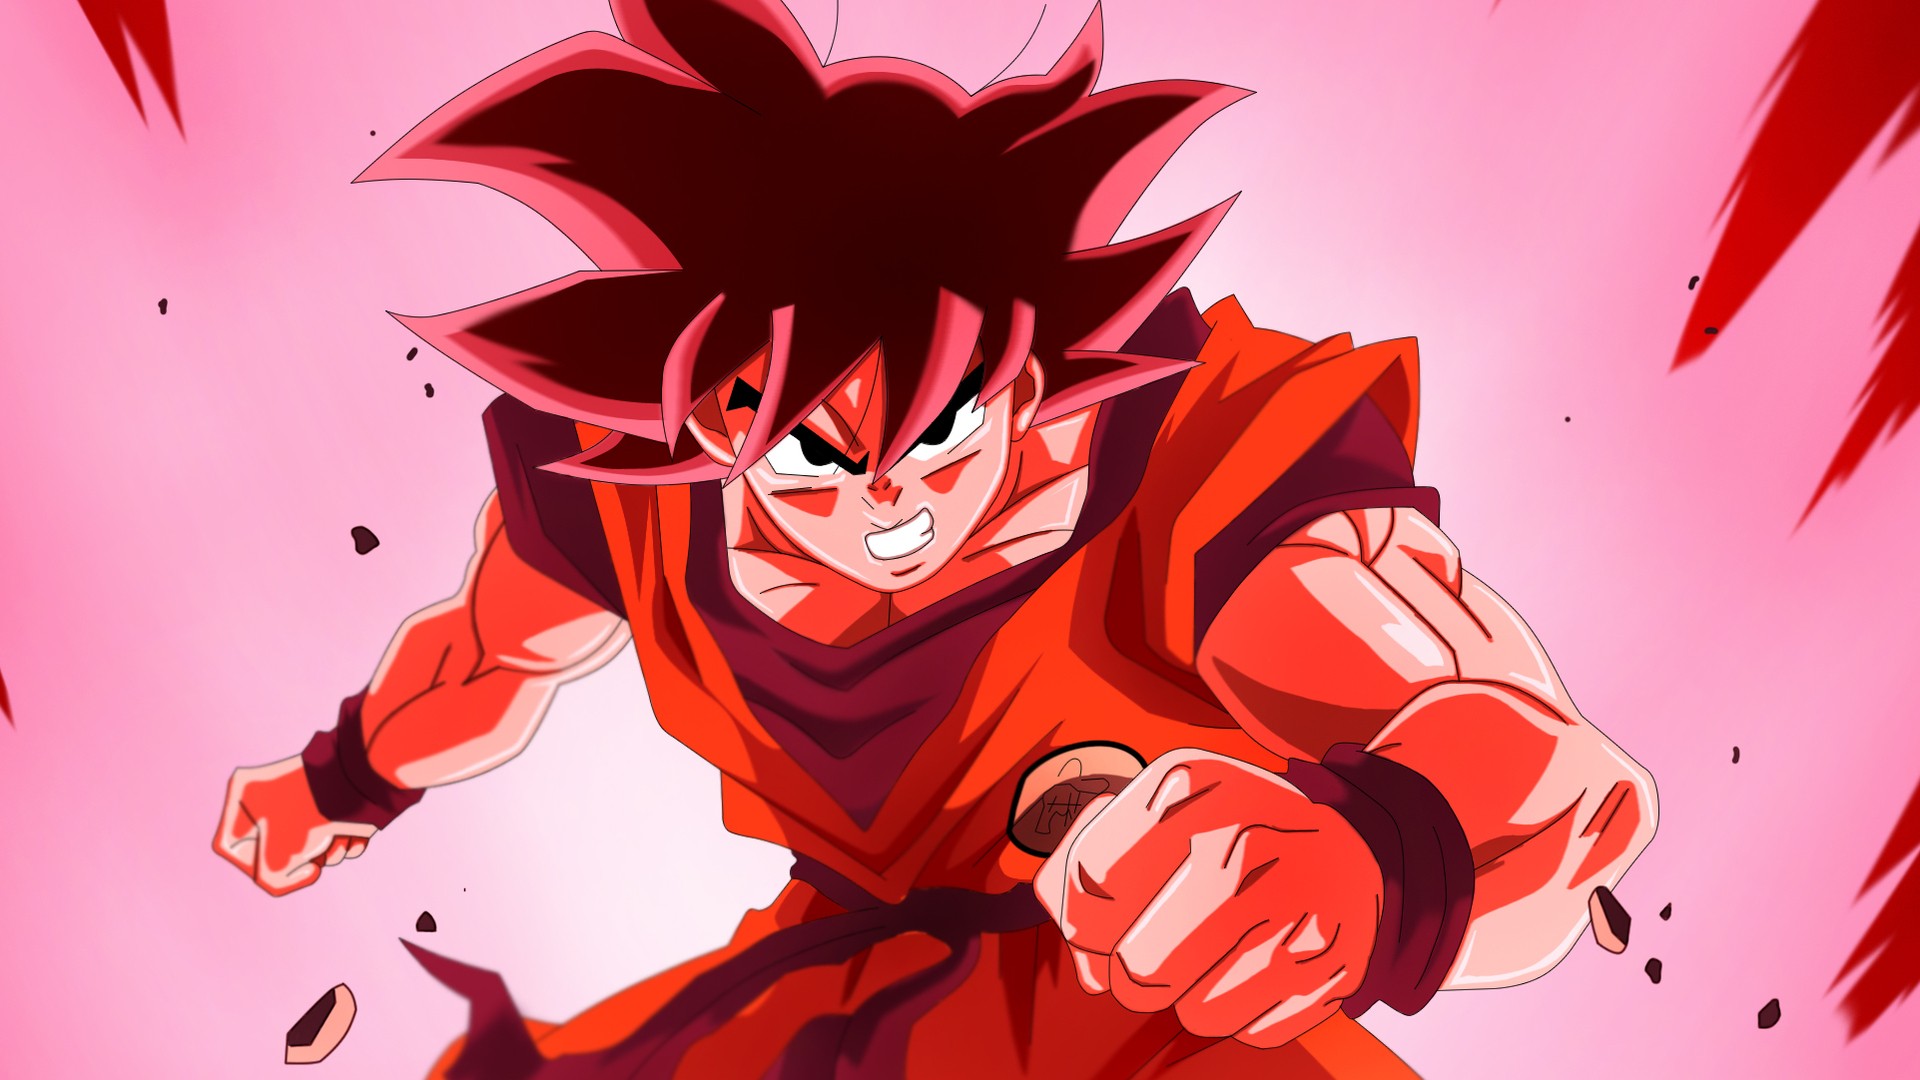 Download the Goku Charging Up Wallpaper, Goku Charging Up iPhone